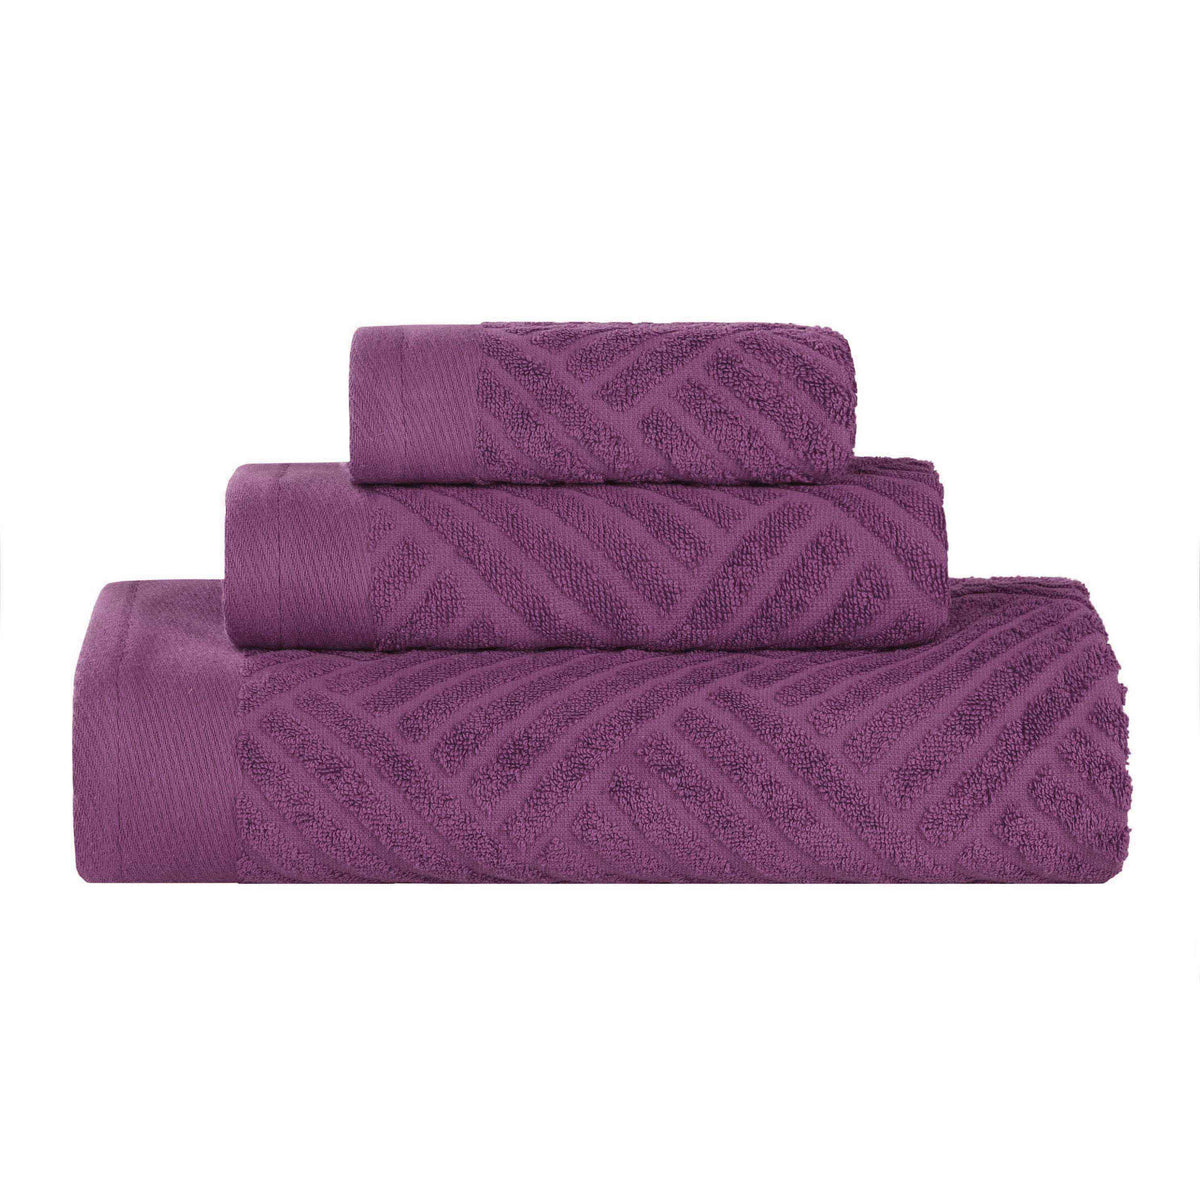 Basketweave Egyptian Cotton Jacquard 3 Piece Assorted Towel Set - MajesticPurple